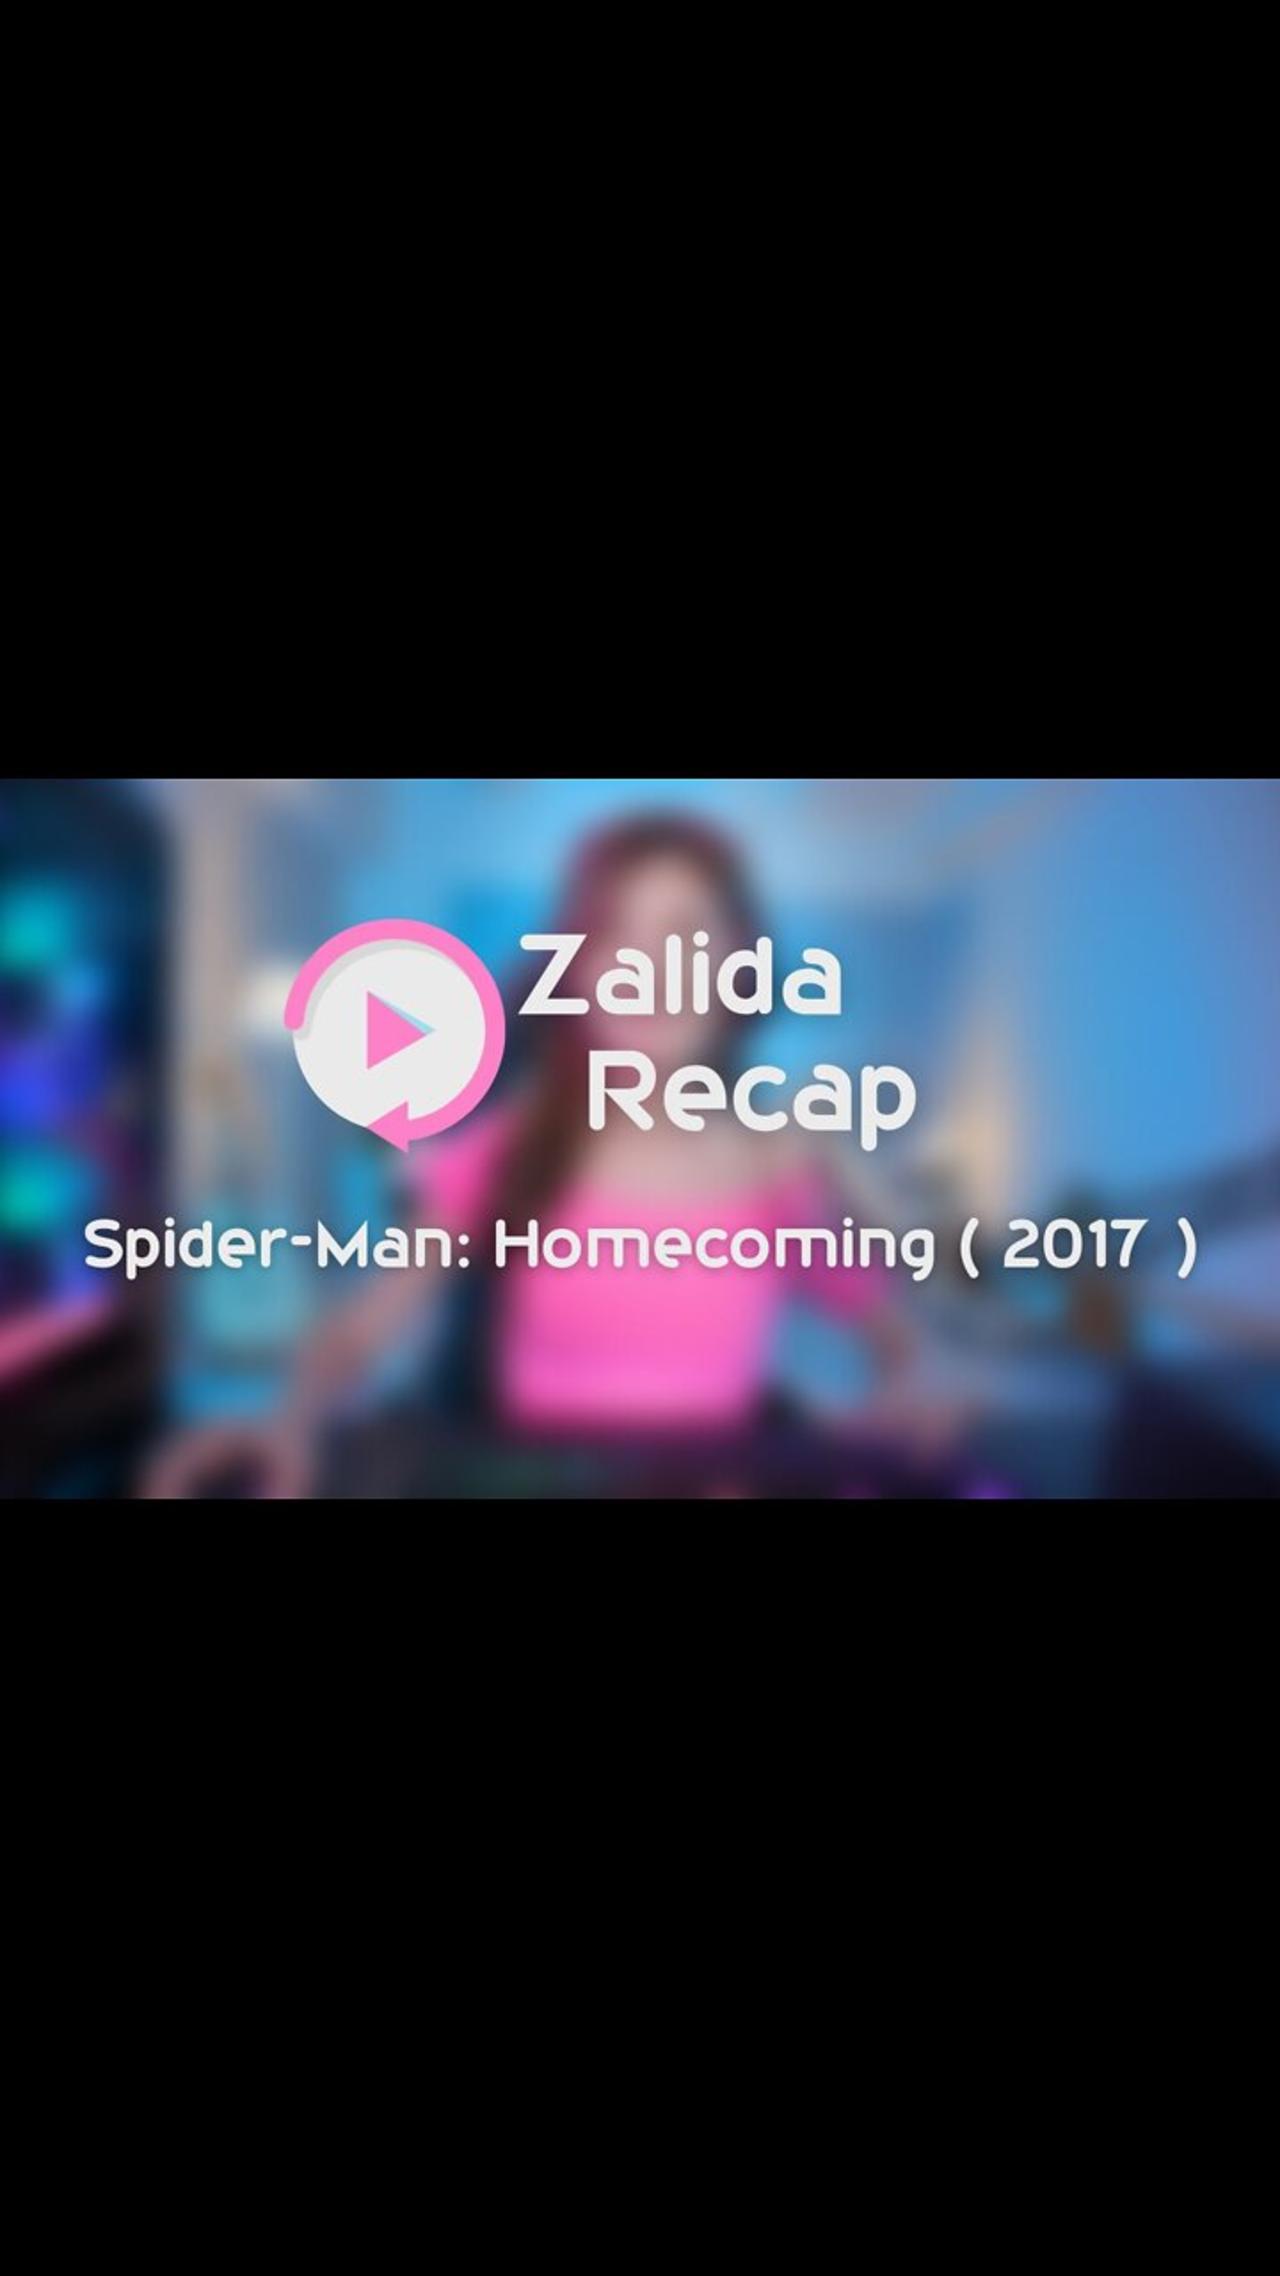 Spider-Man Homecoming ( 2017 ) - Movie Recap Summary